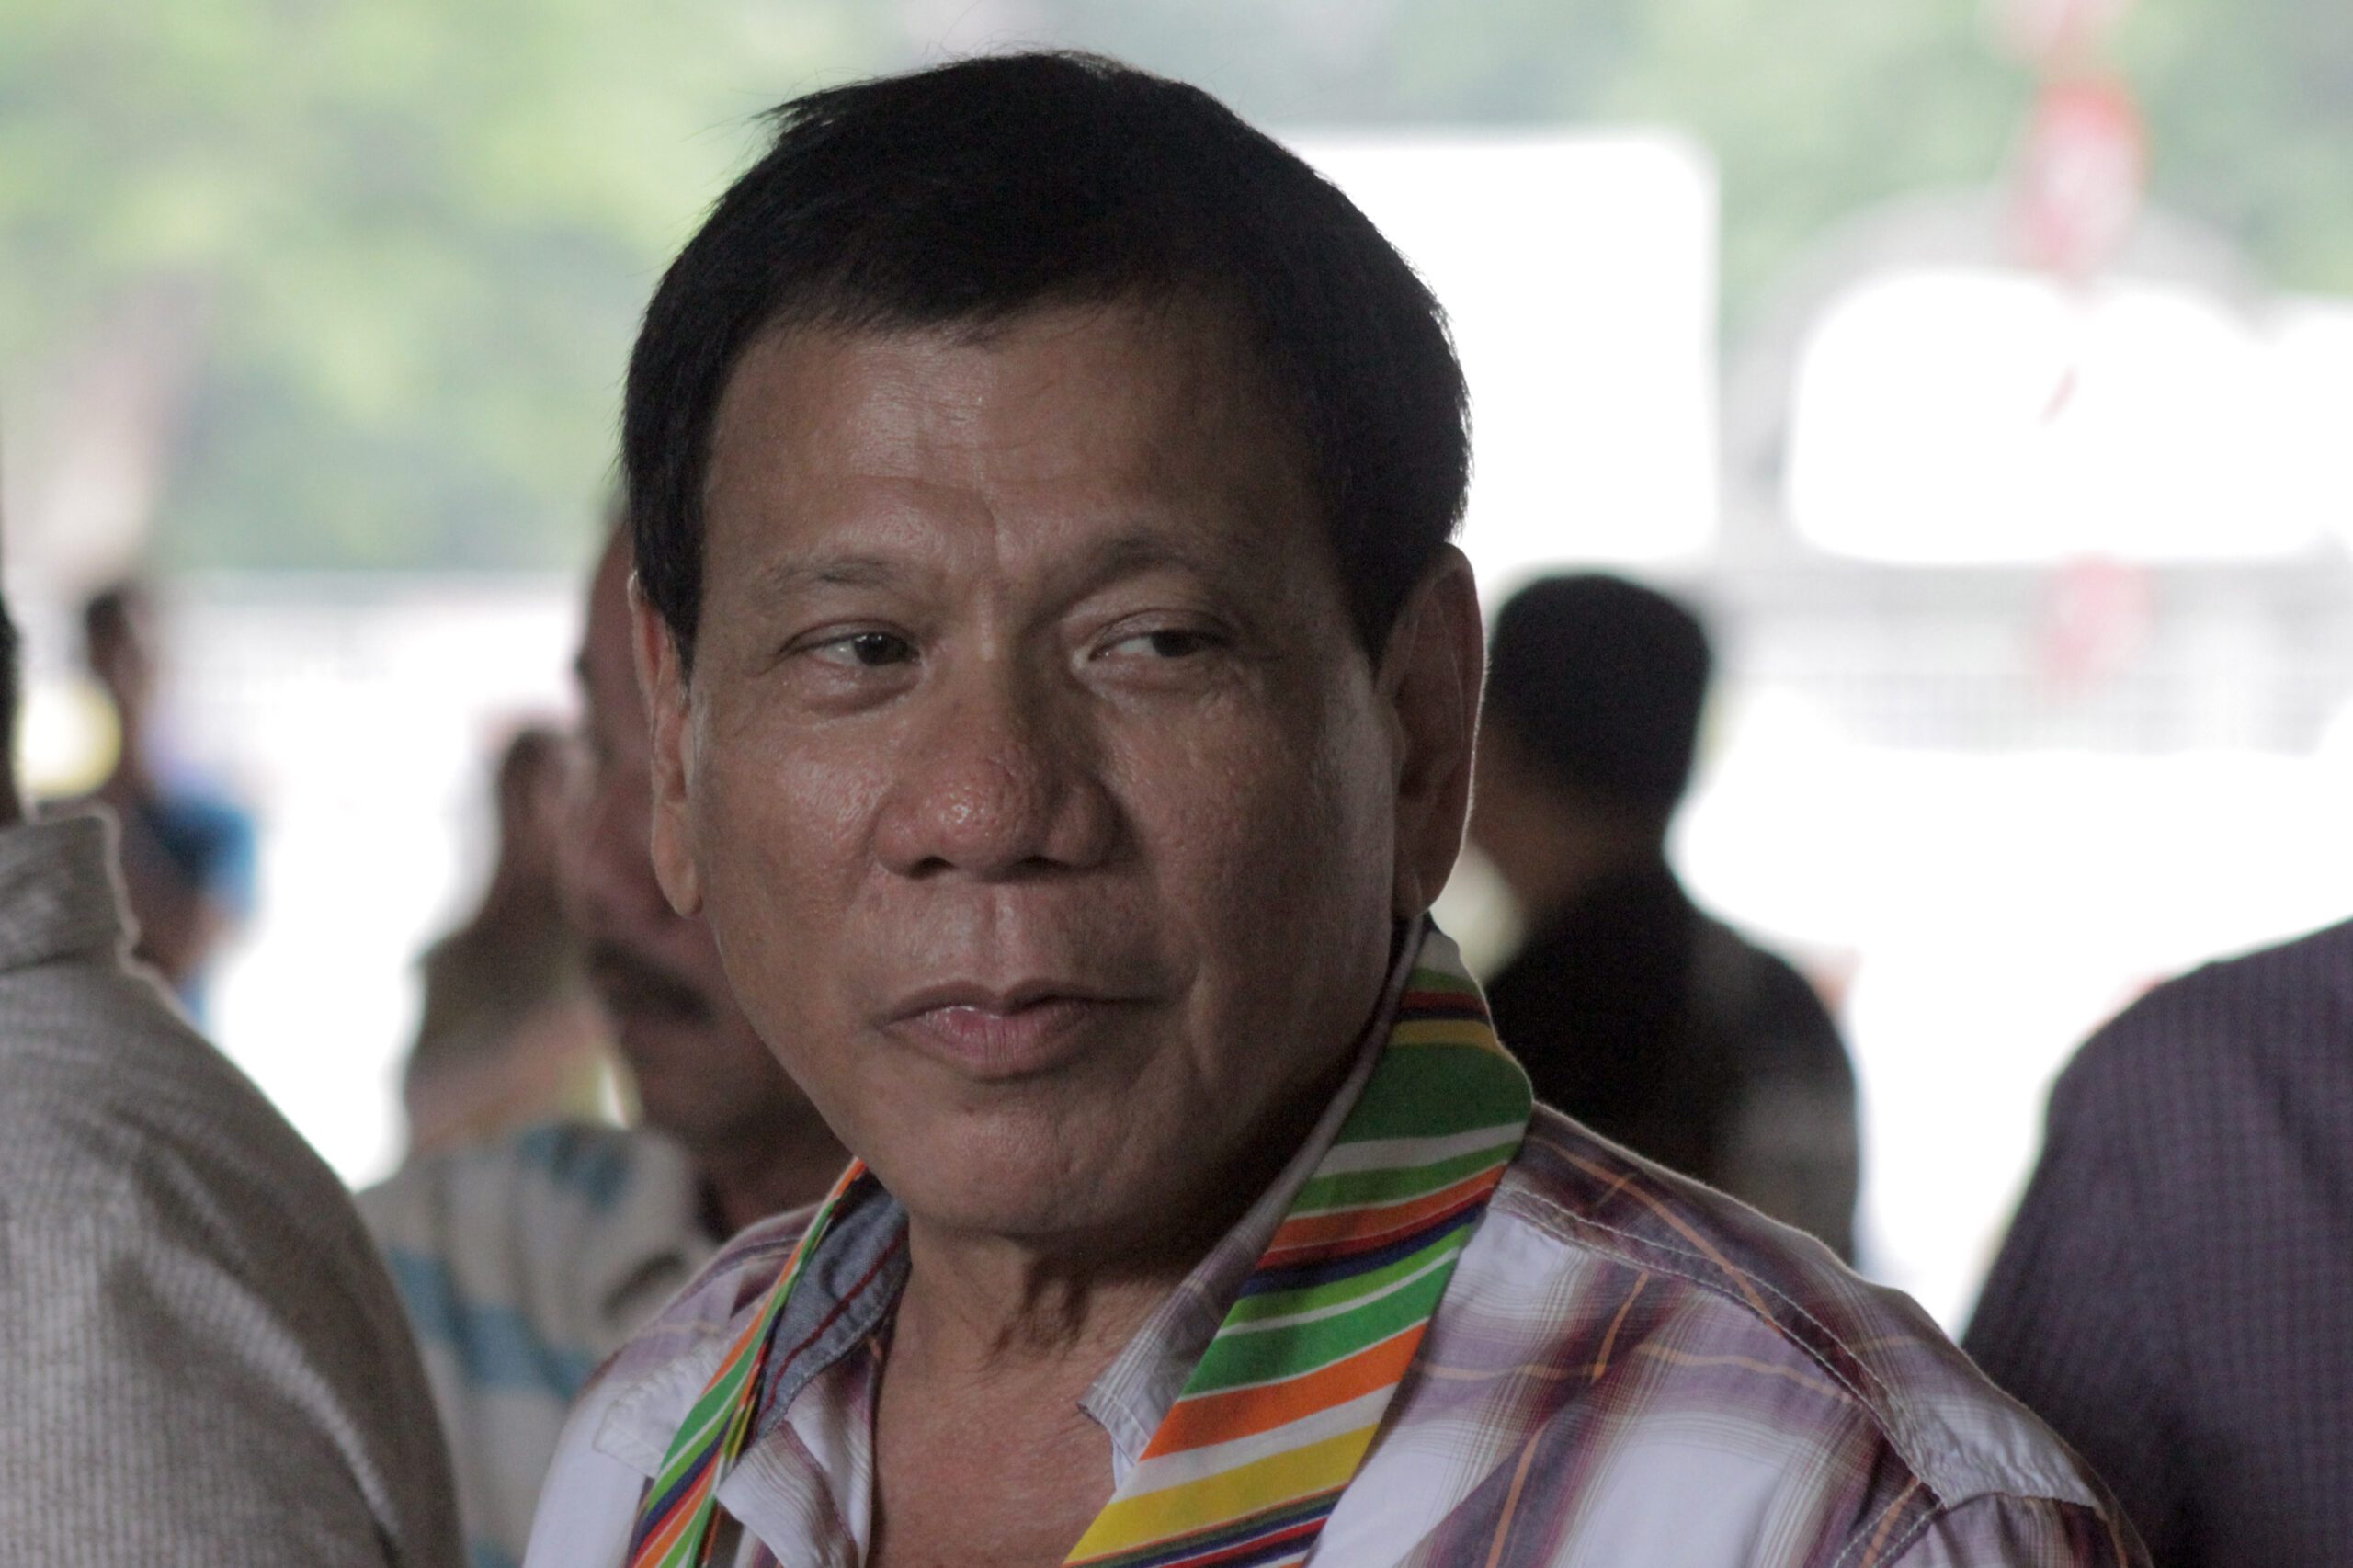 Comelec accepts Duterte’s presidential bid